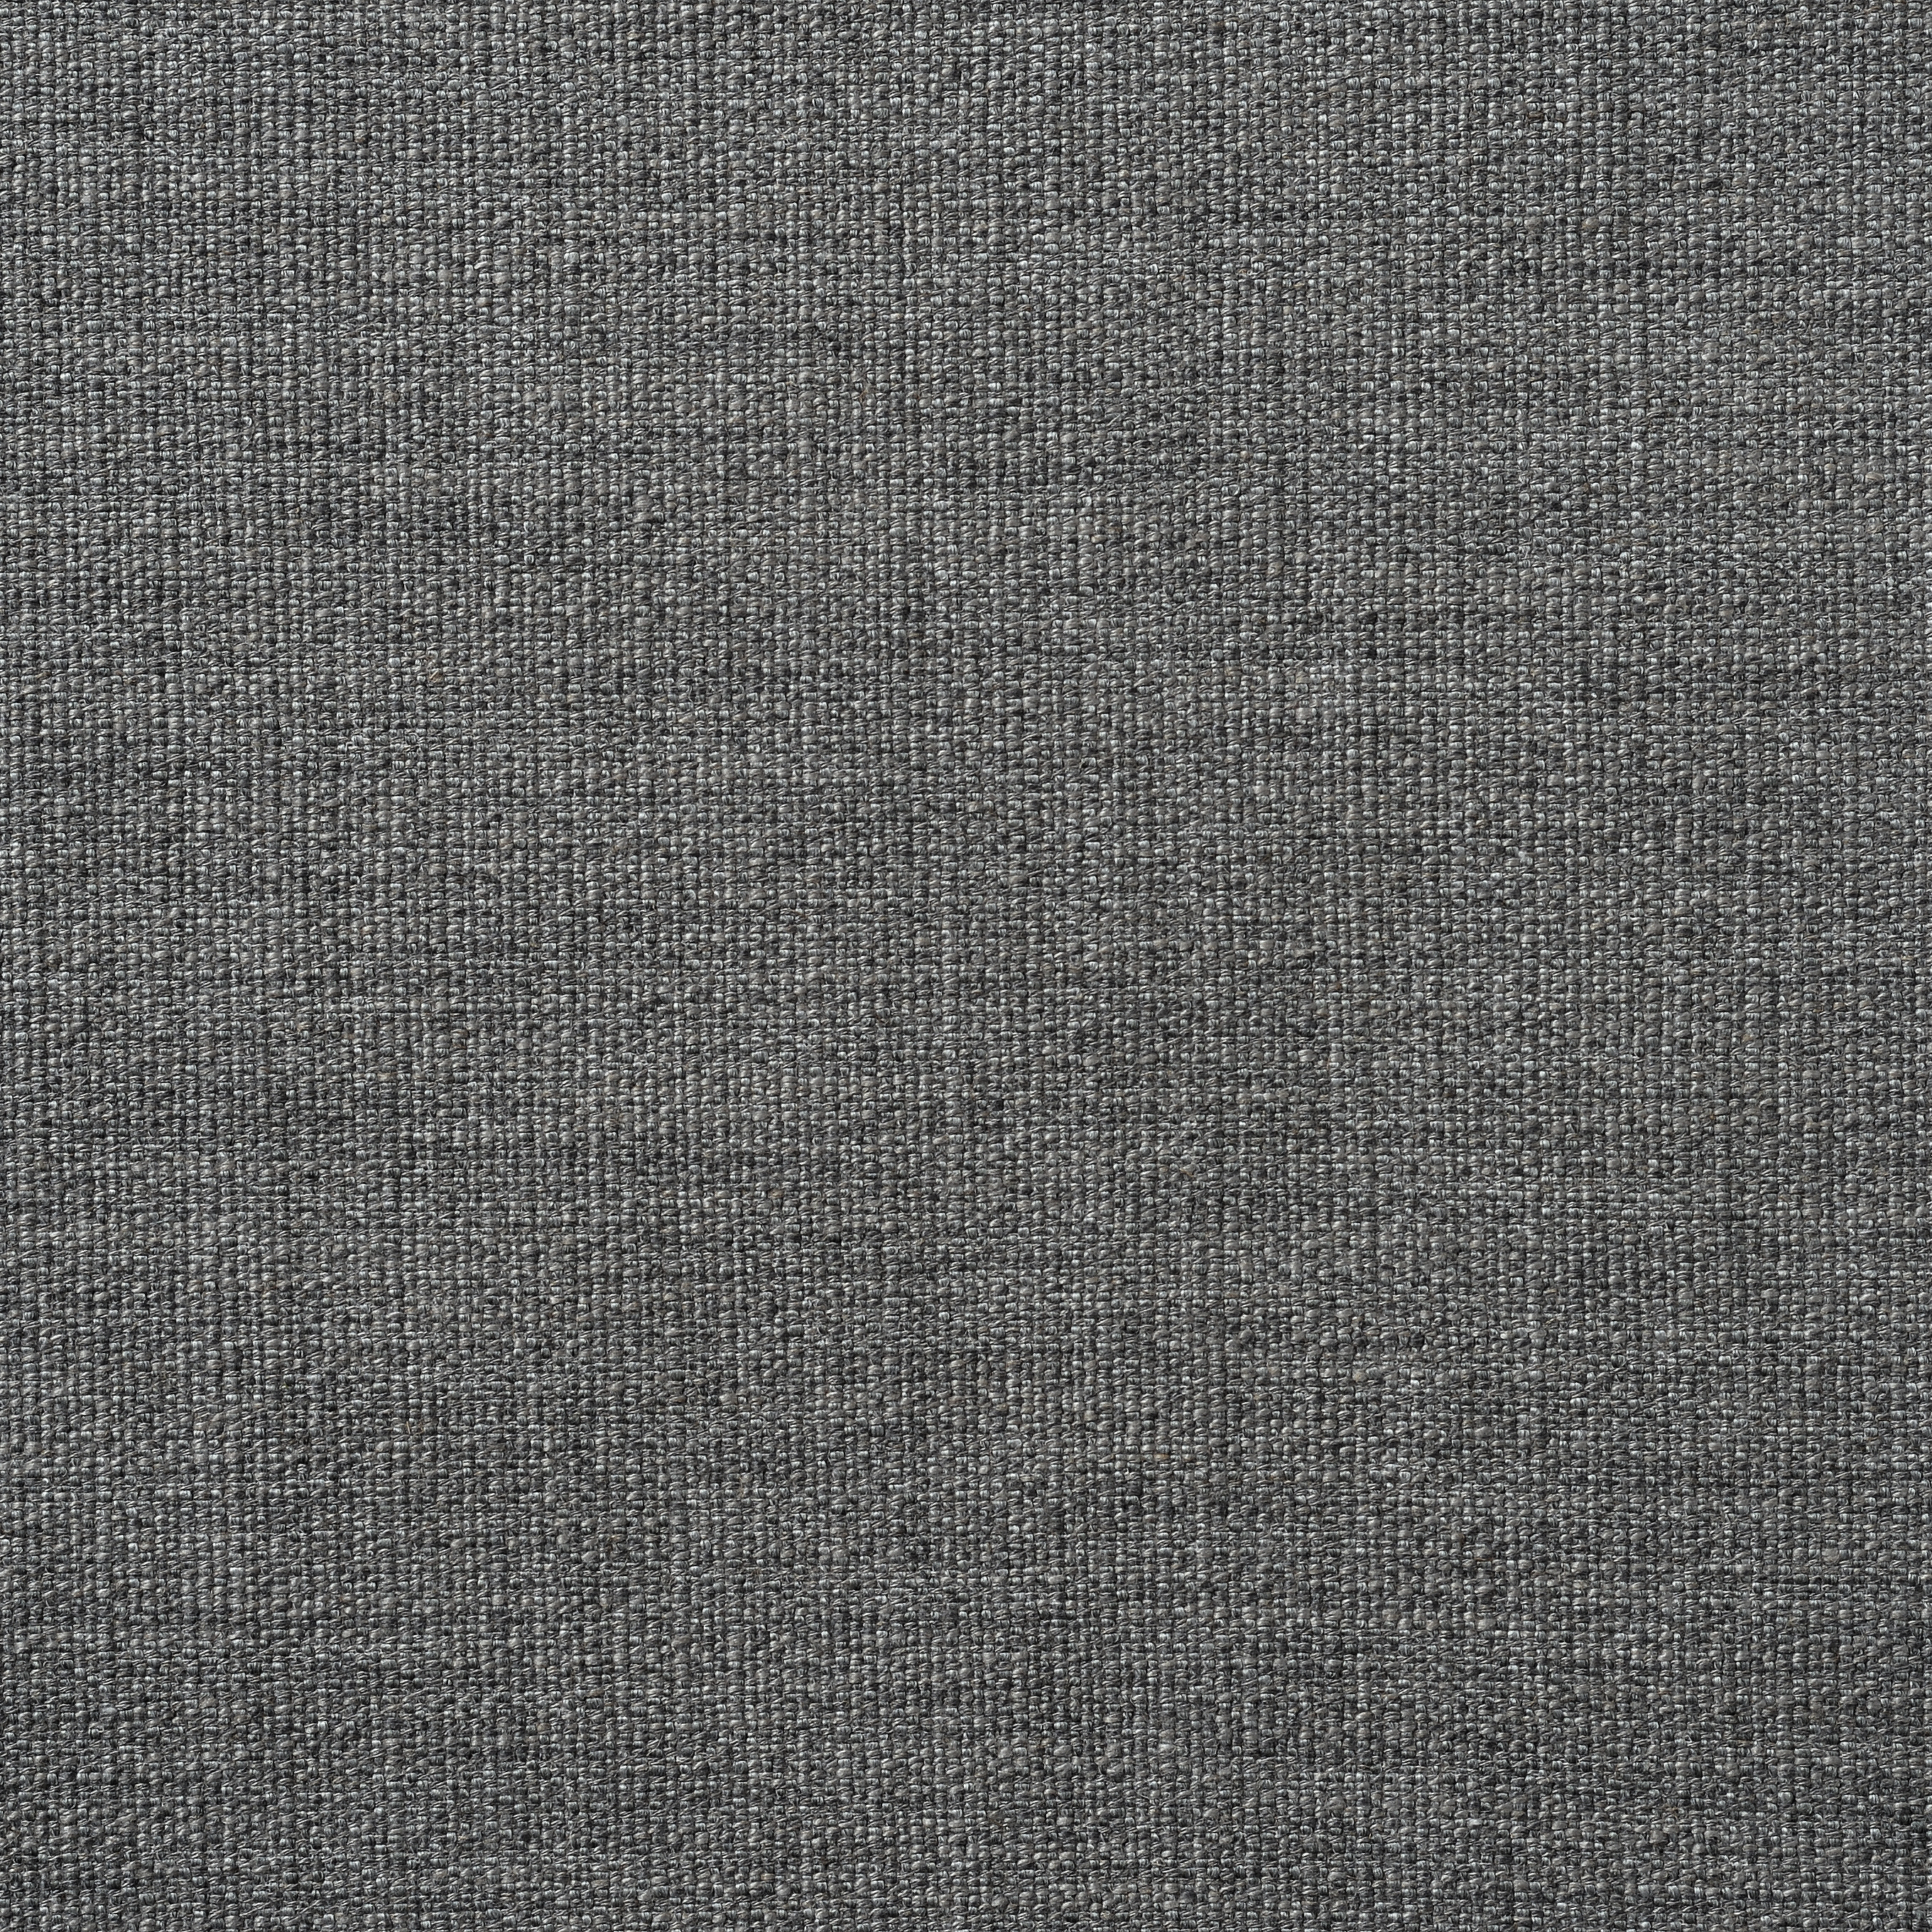 Freeman Rustic Weave - Grey Marl